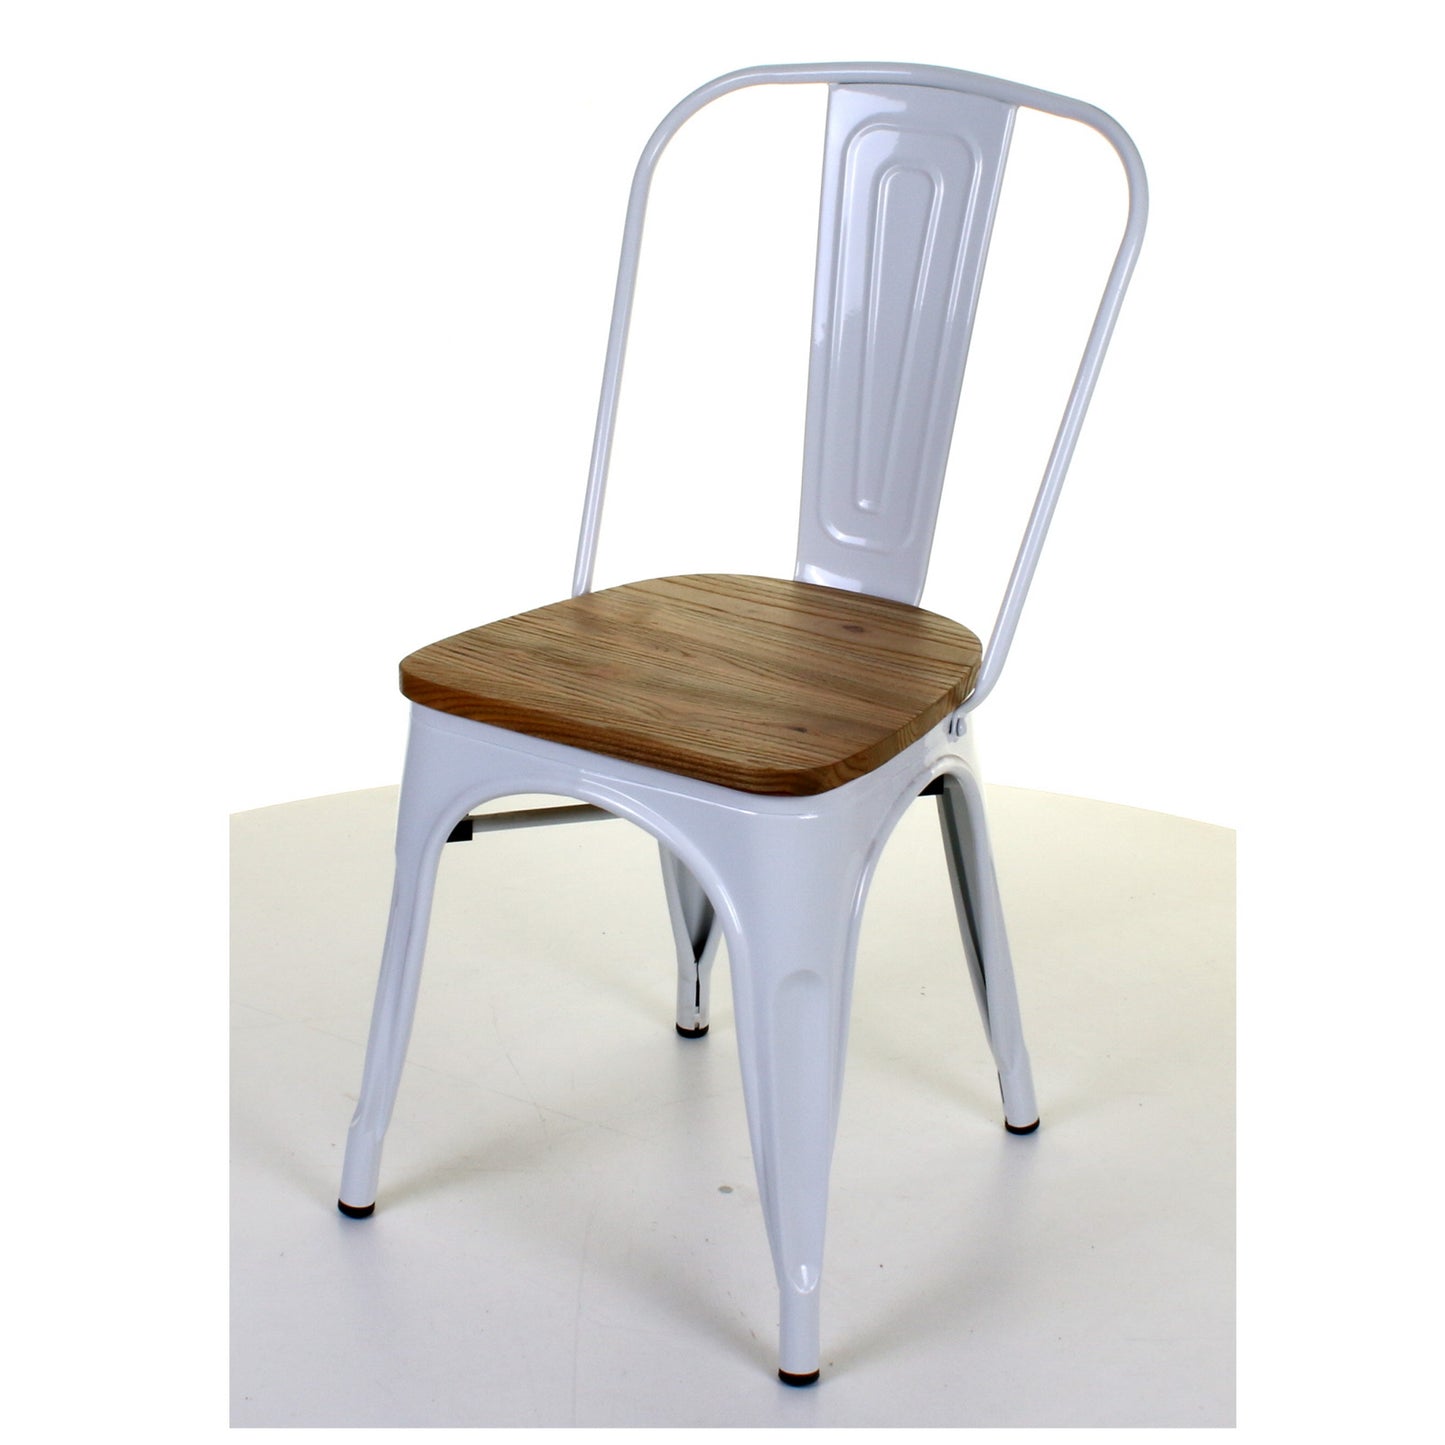 9PC Taranto Table, 2 Palermo Chairs & 6 Rho Stools Set - White